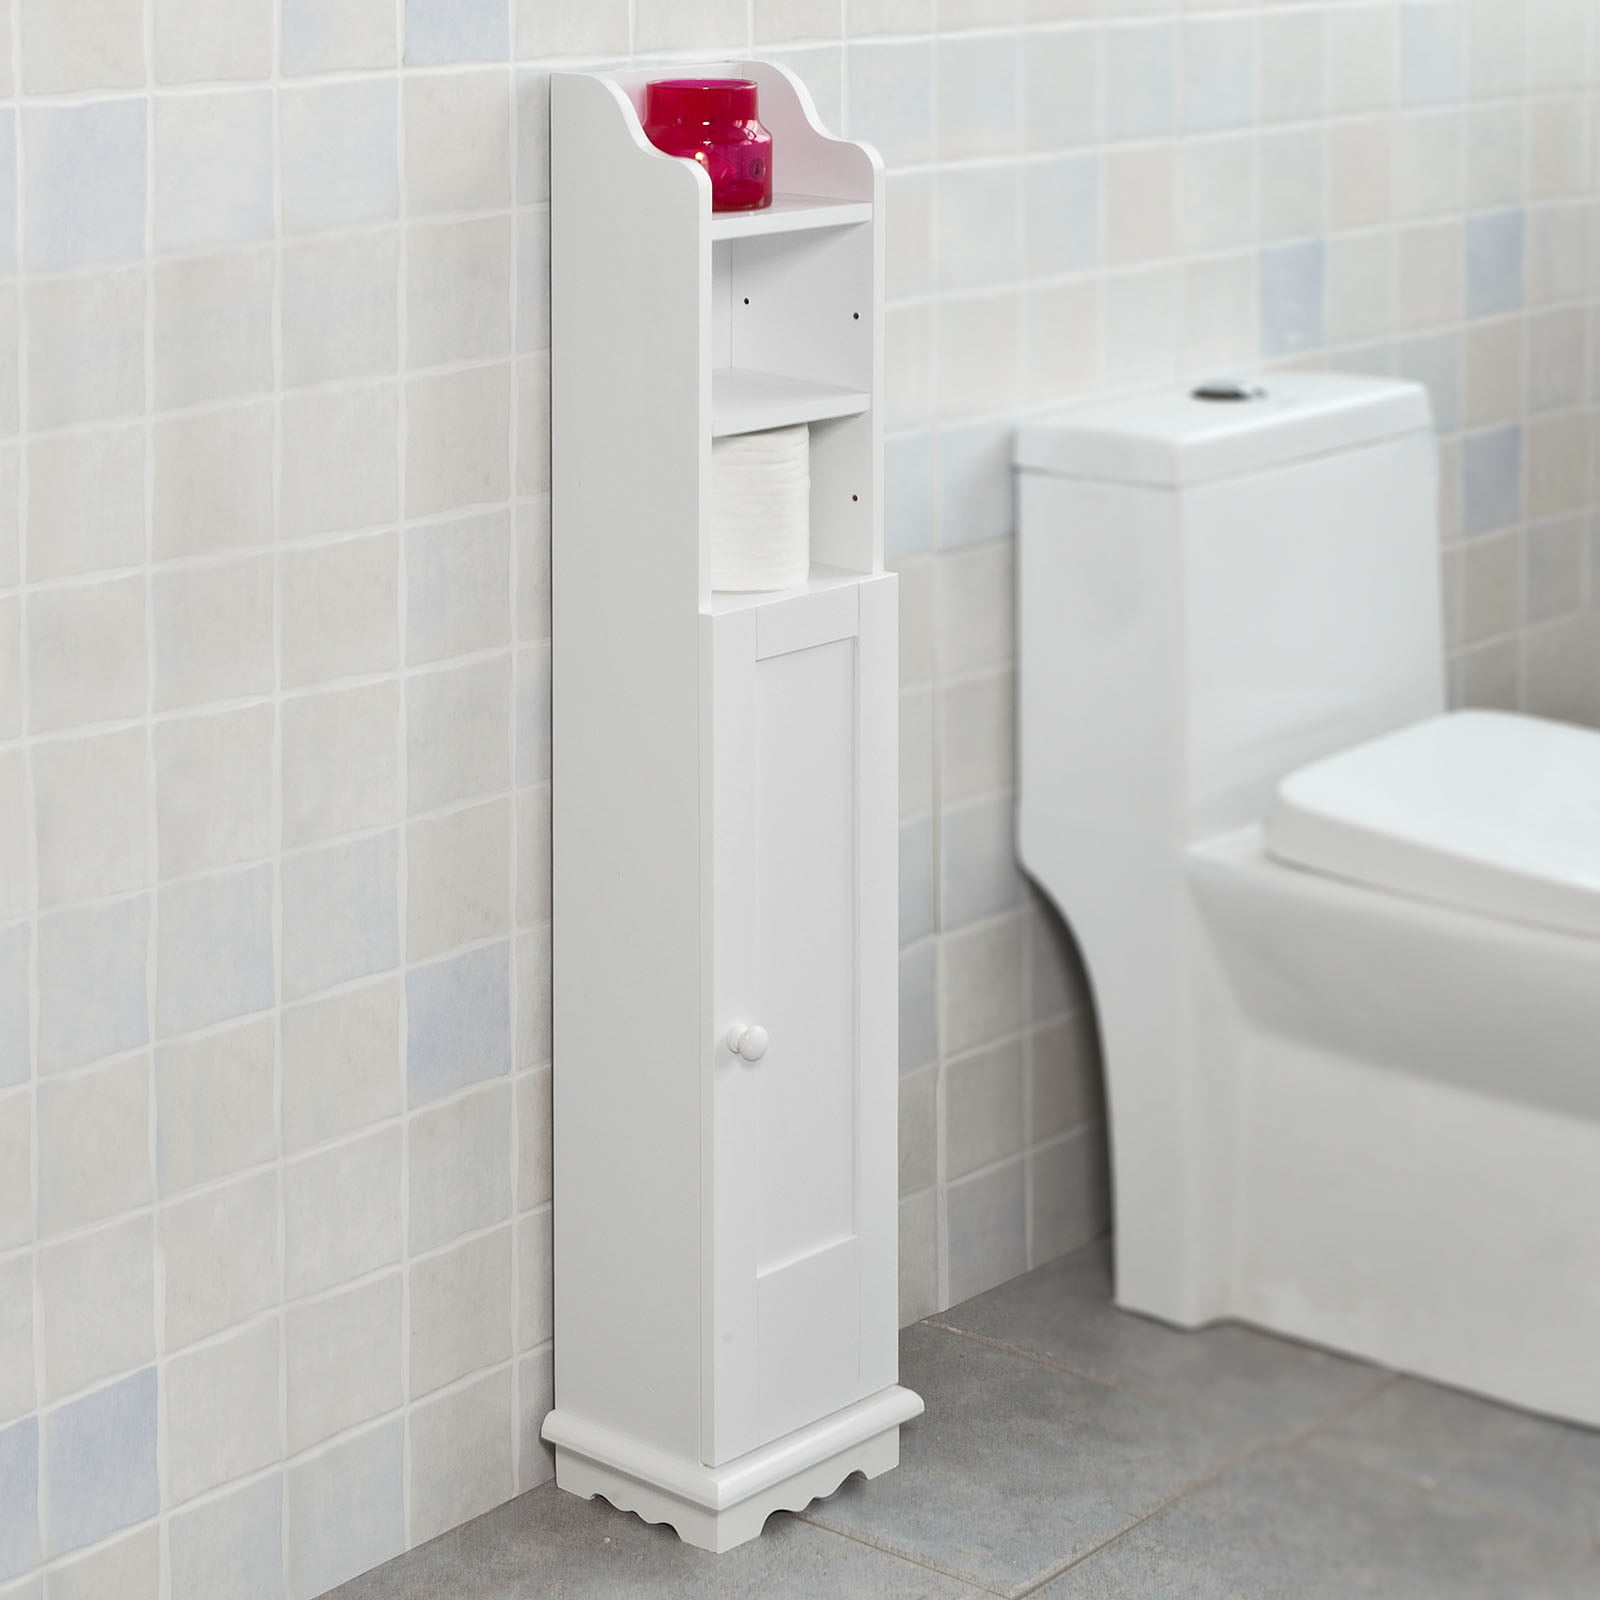 image of Haotian FRG177-W, White Free Standing Wooden Bathroom Toilet Paper Roll Holder Storage Cabinet Holder Organizer Bath Toilet